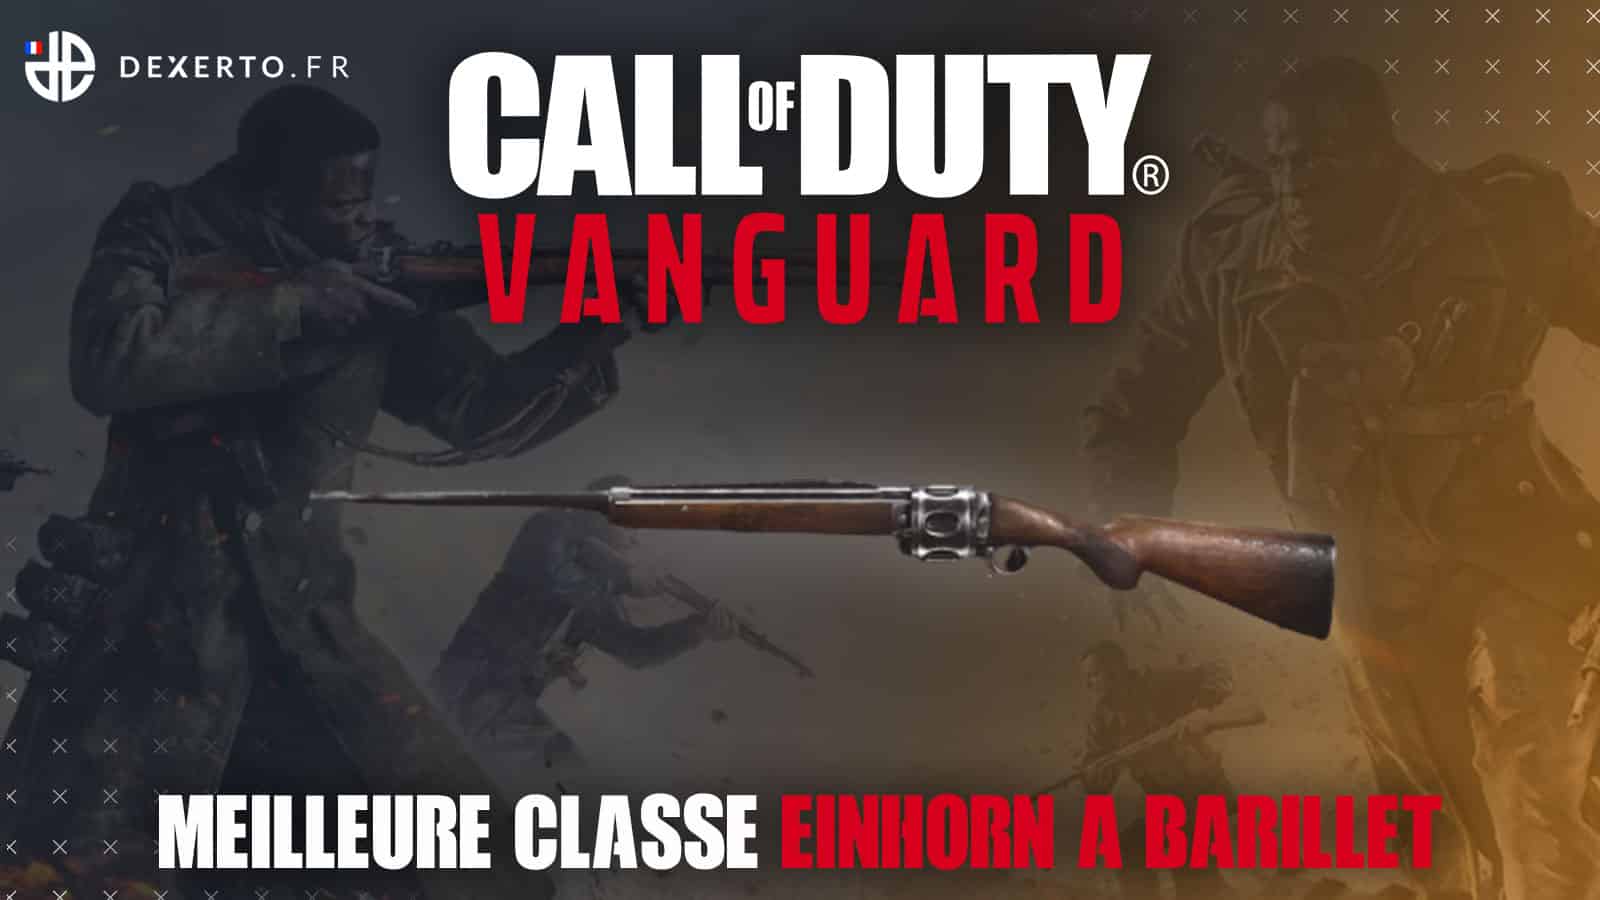 Classe Einhorn à barillet CoD Vanguard